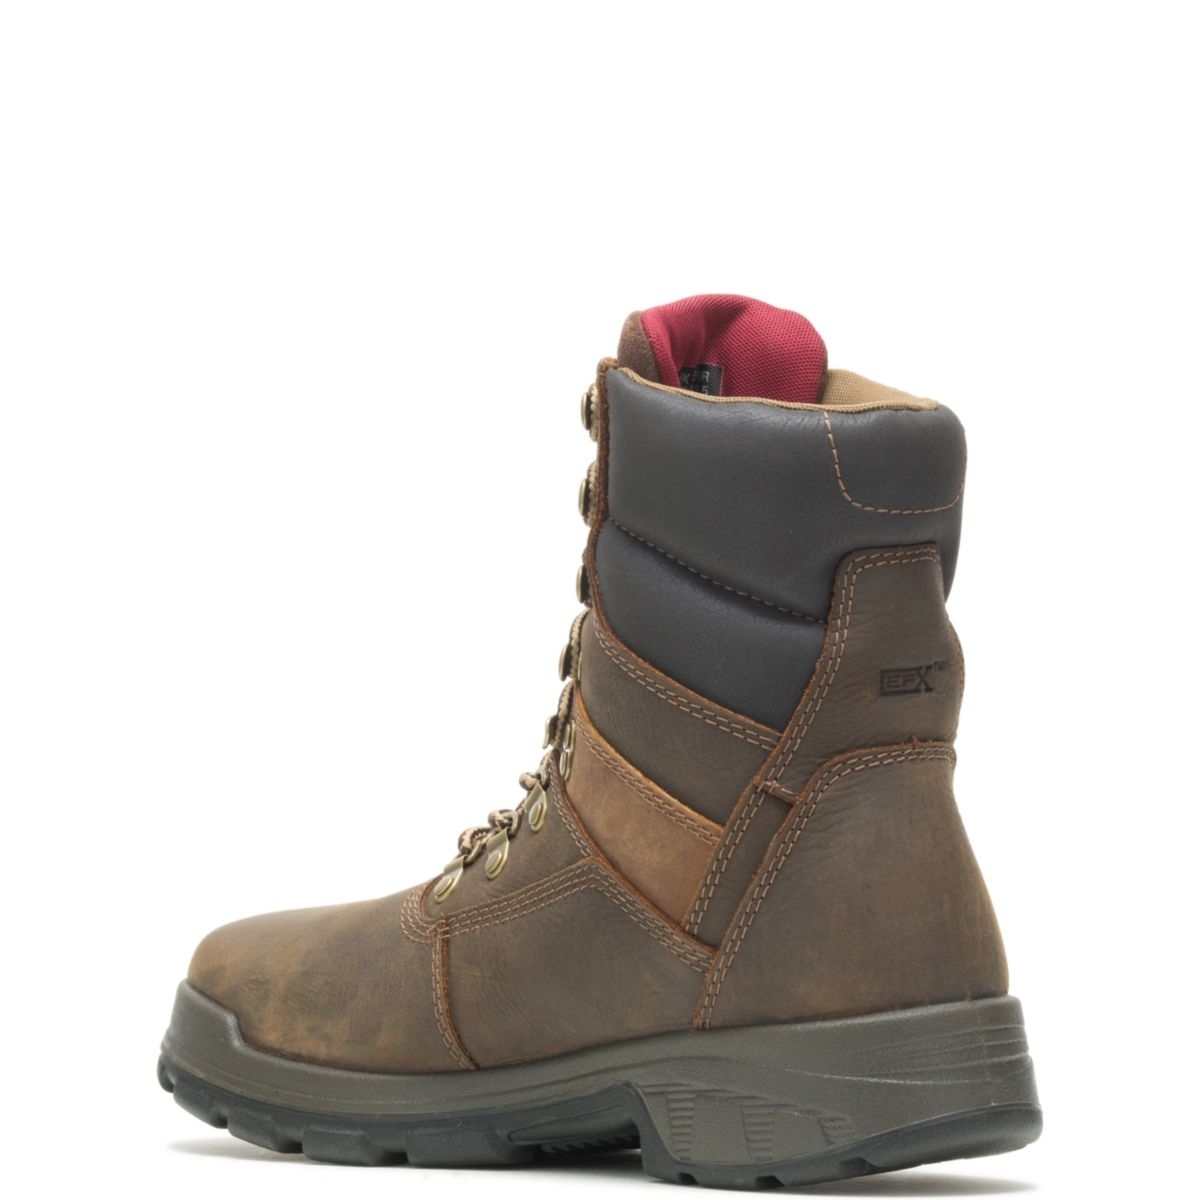 WOLVERINE Men's Cabor EPXÂ® 8 Waterproof Composite Toe Work Boot Dark Brown - W10316 BROWN - BROWN, 14-D